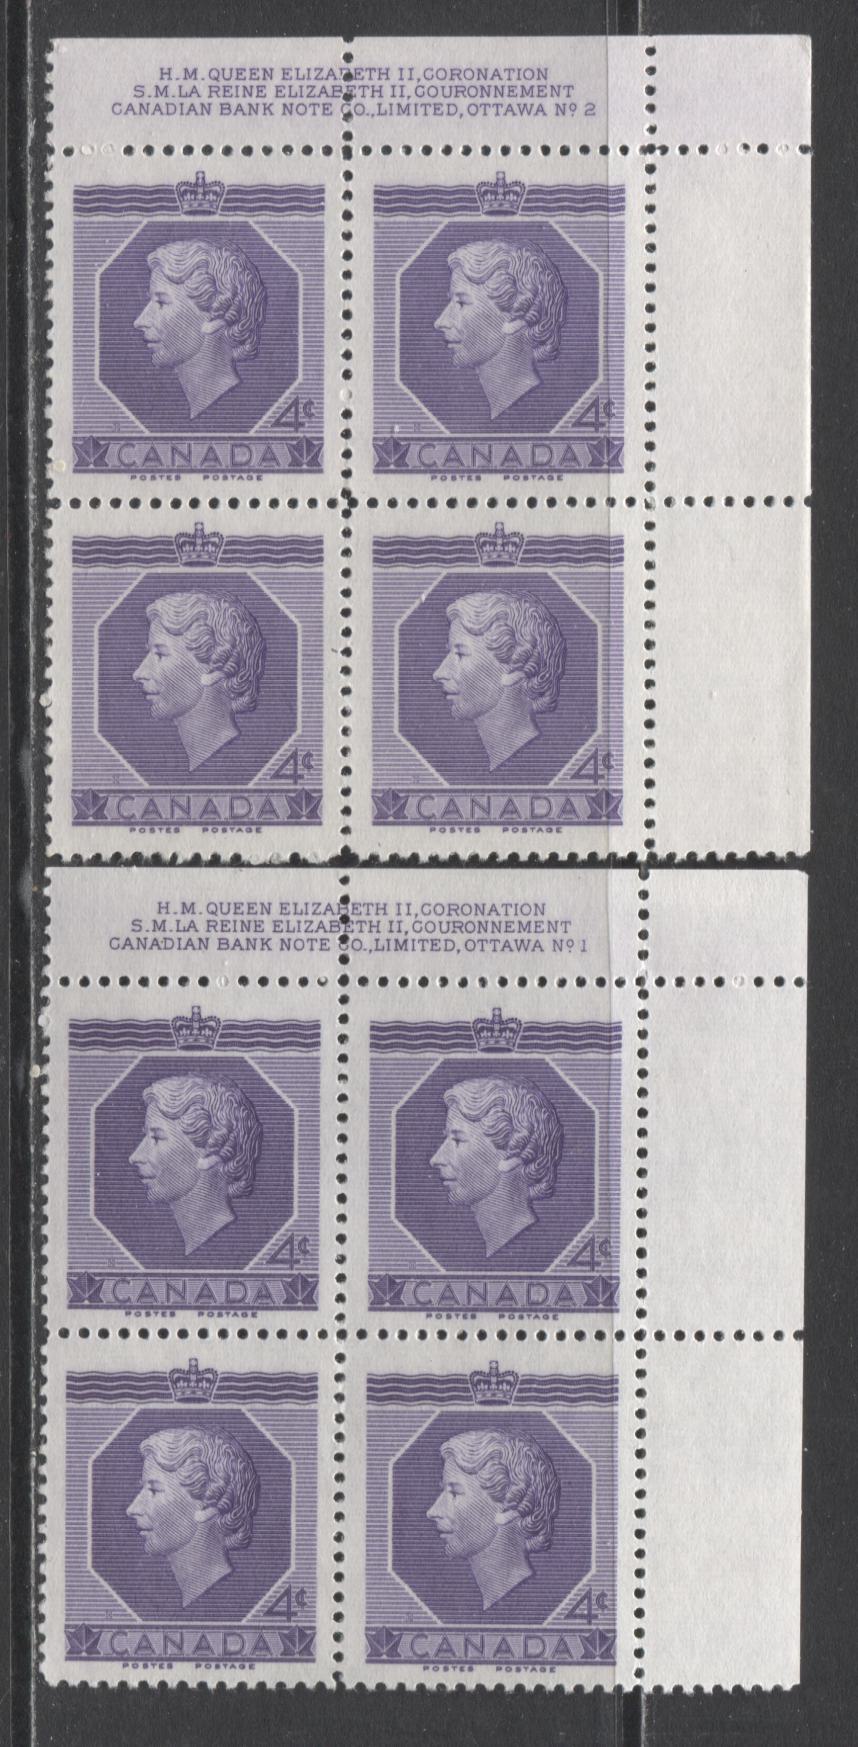 Lot 38 Canada #330 4c Violet Queen Elizabeth II, 1953 Coronation Issue, 2 VFNH UR Plates 1-2 Blocks Of 4